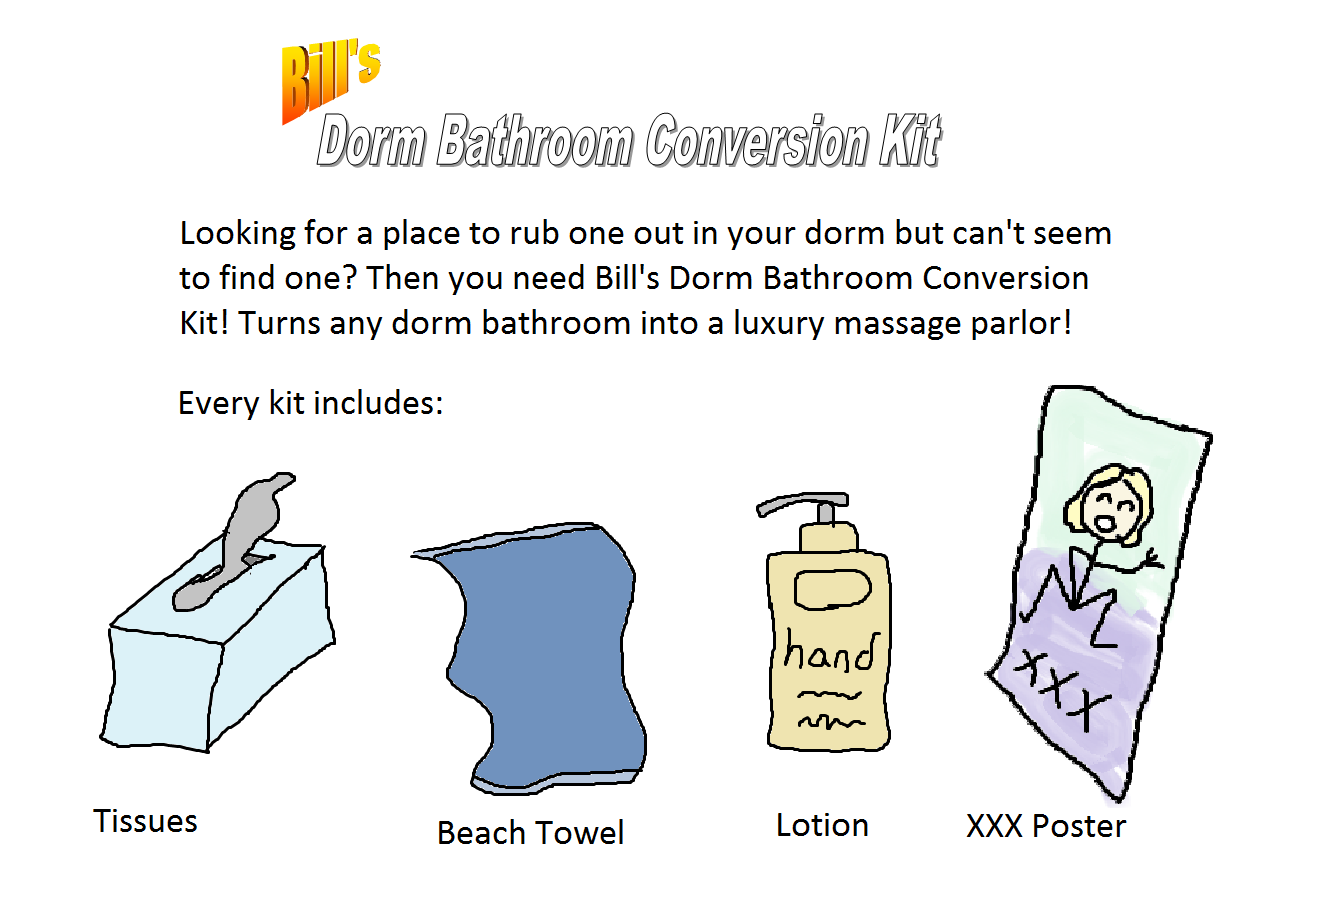 Bill's Dorm Bathroom Conversion Kit